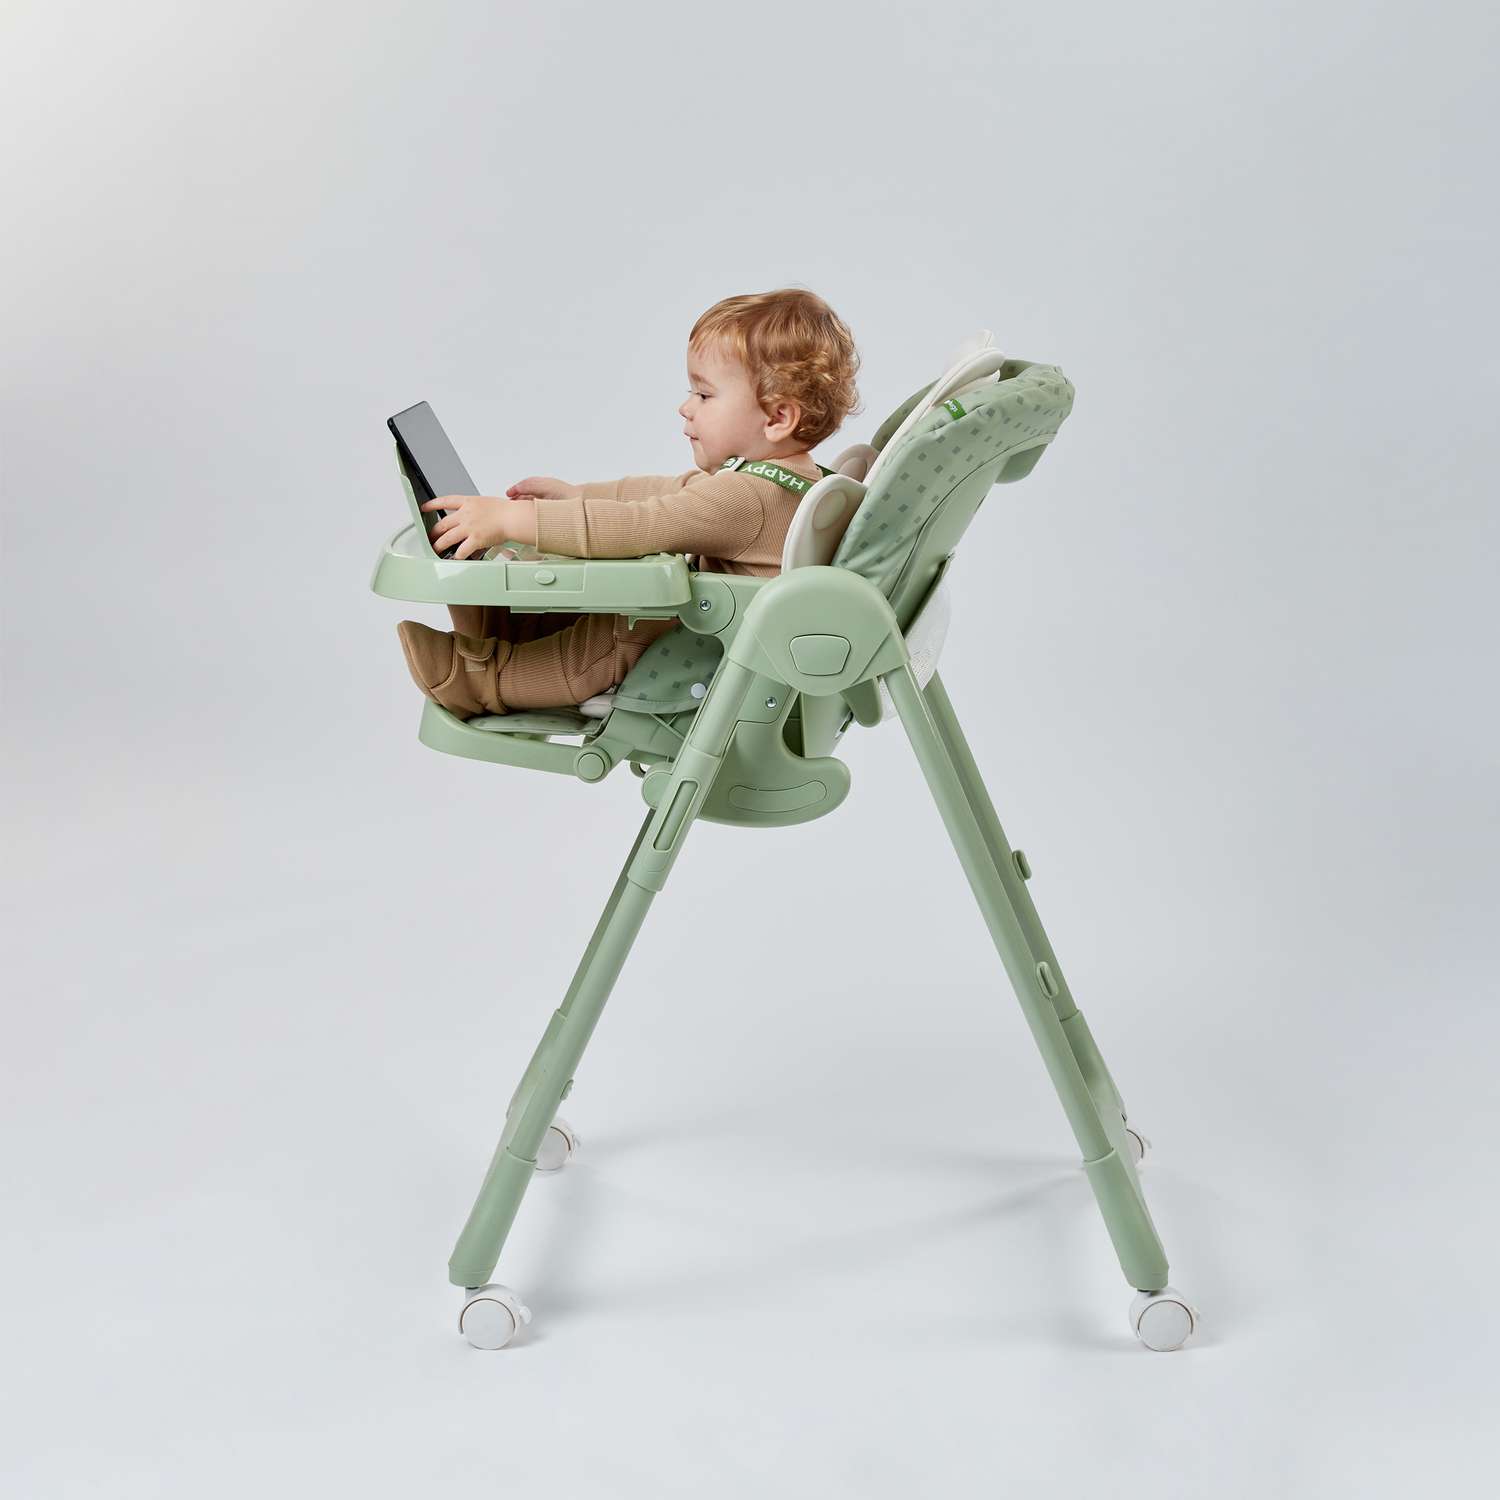 стул для кормления happy baby william pro sand